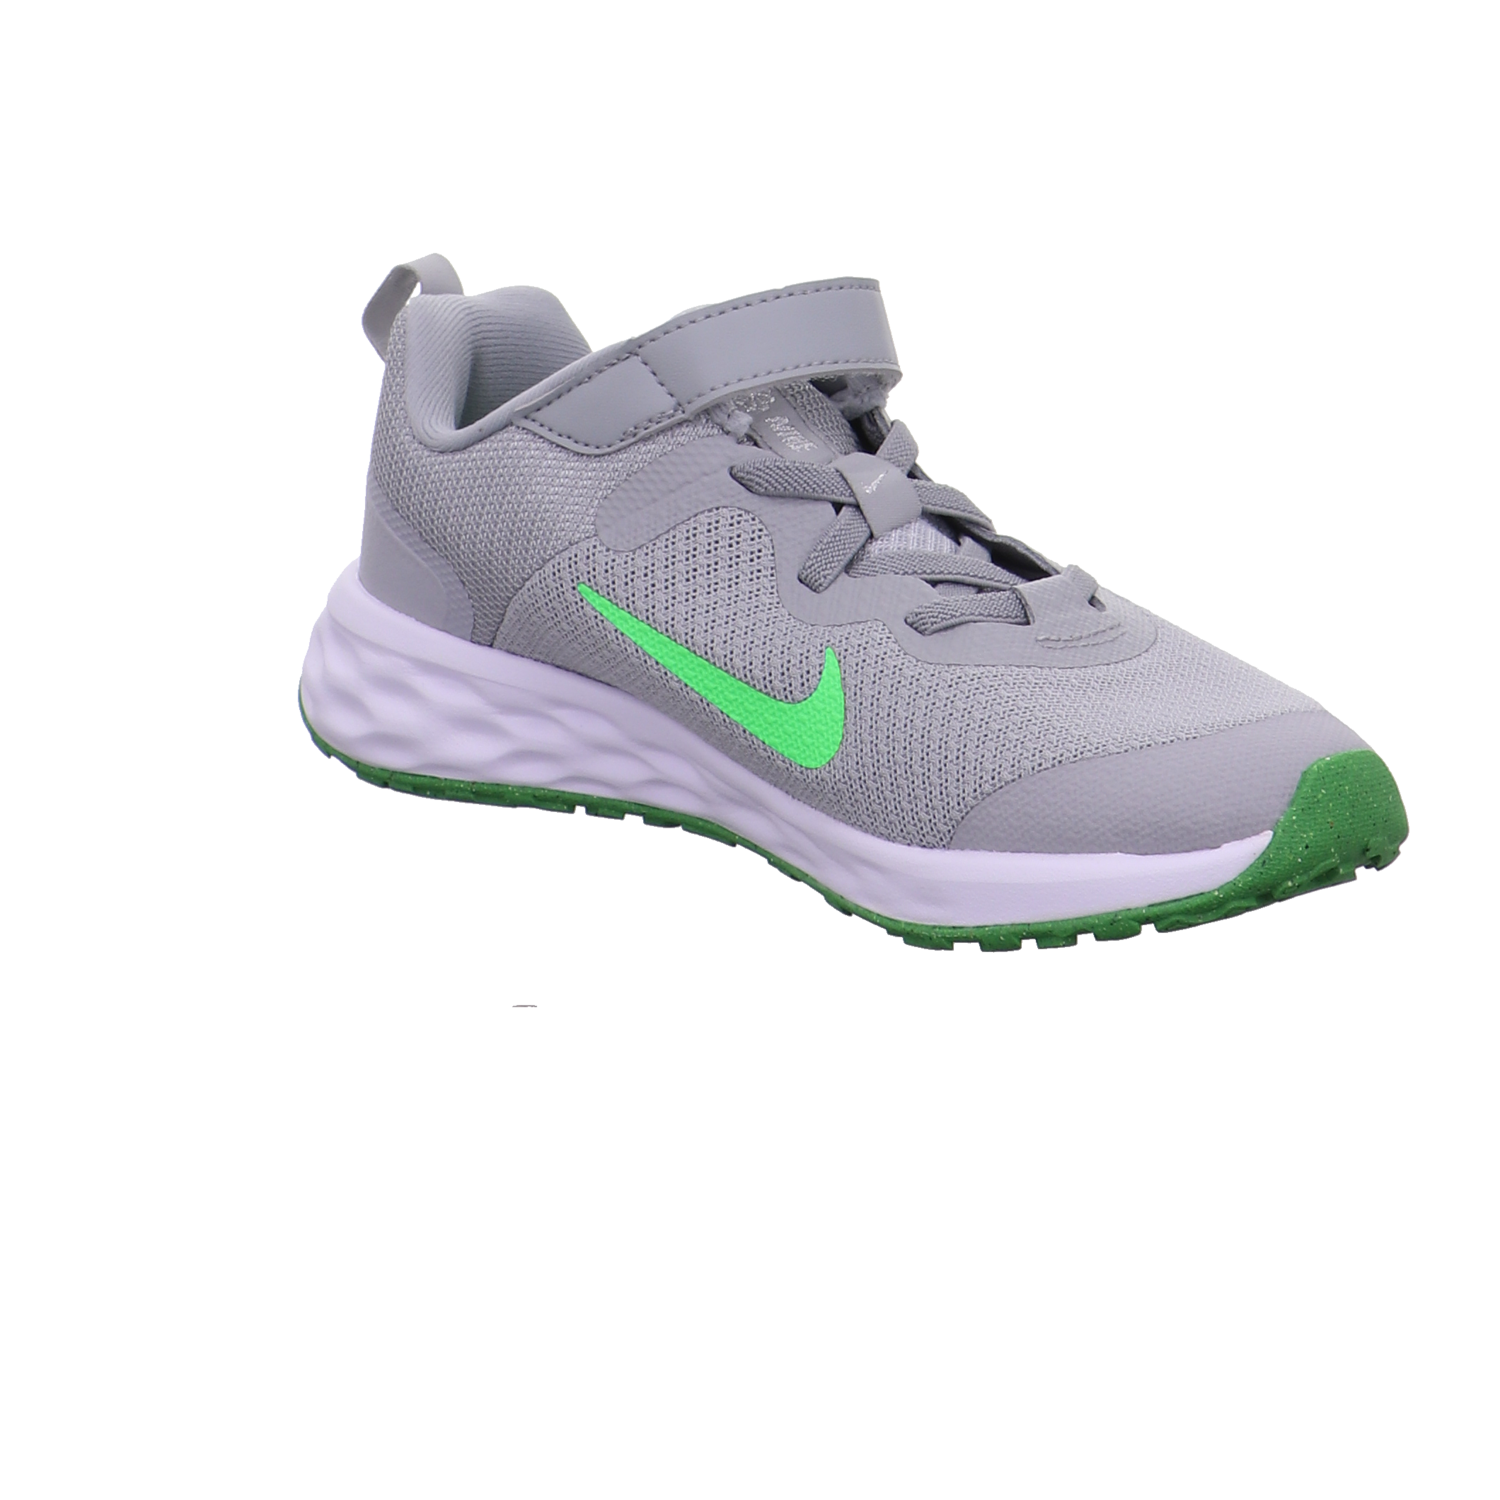 Nike Krabbel- und Lauflernschuhe grau kombi Bild7